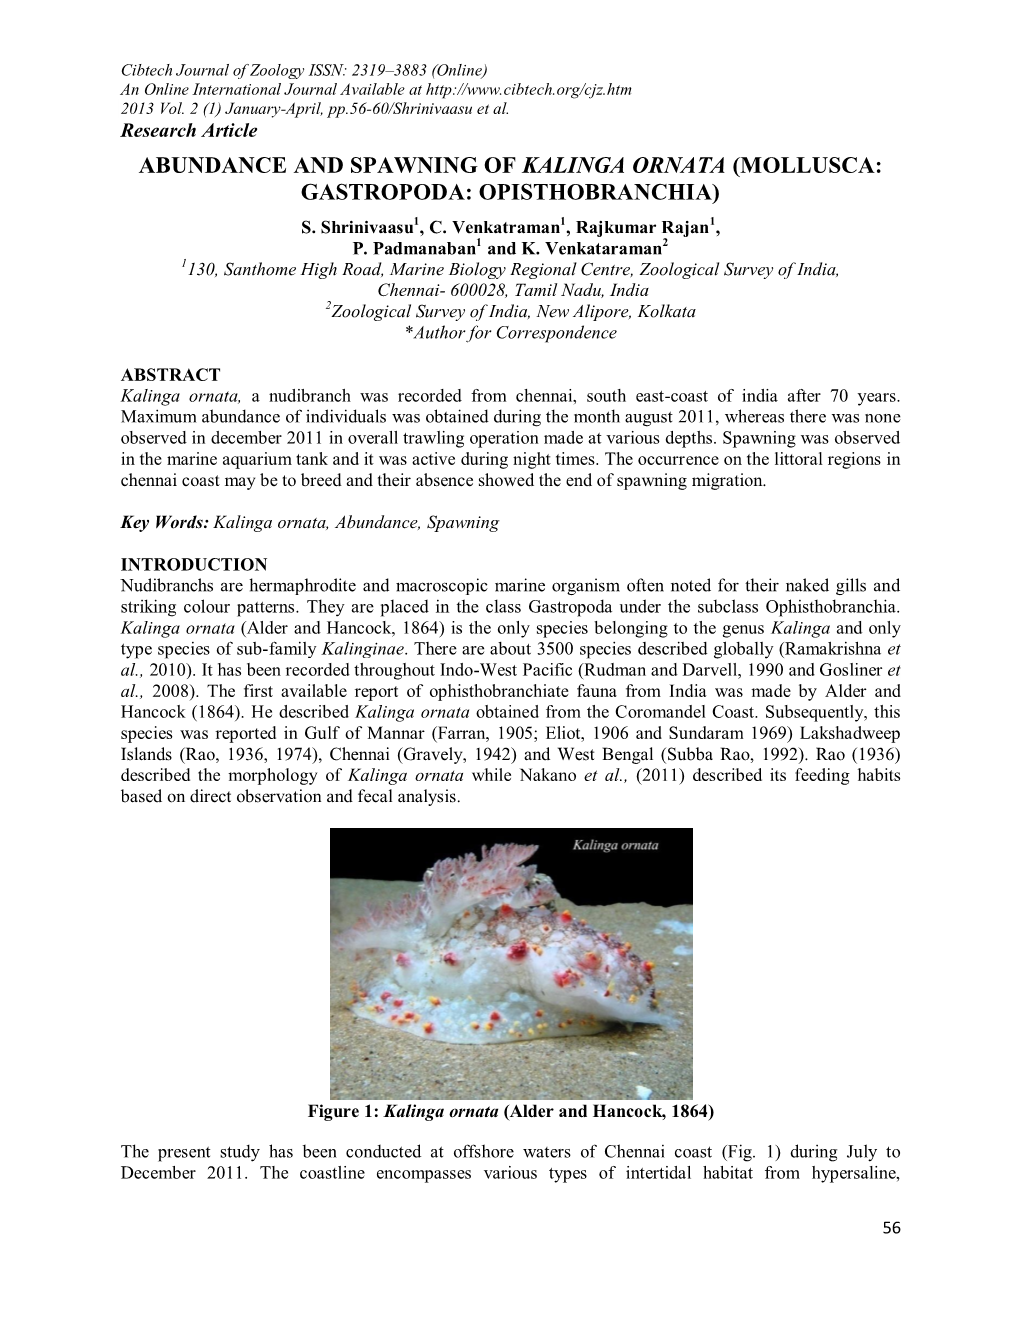 Abundance and Spawning of Kalinga Ornata (Mollusca: Gastropoda: Opisthobranchia)